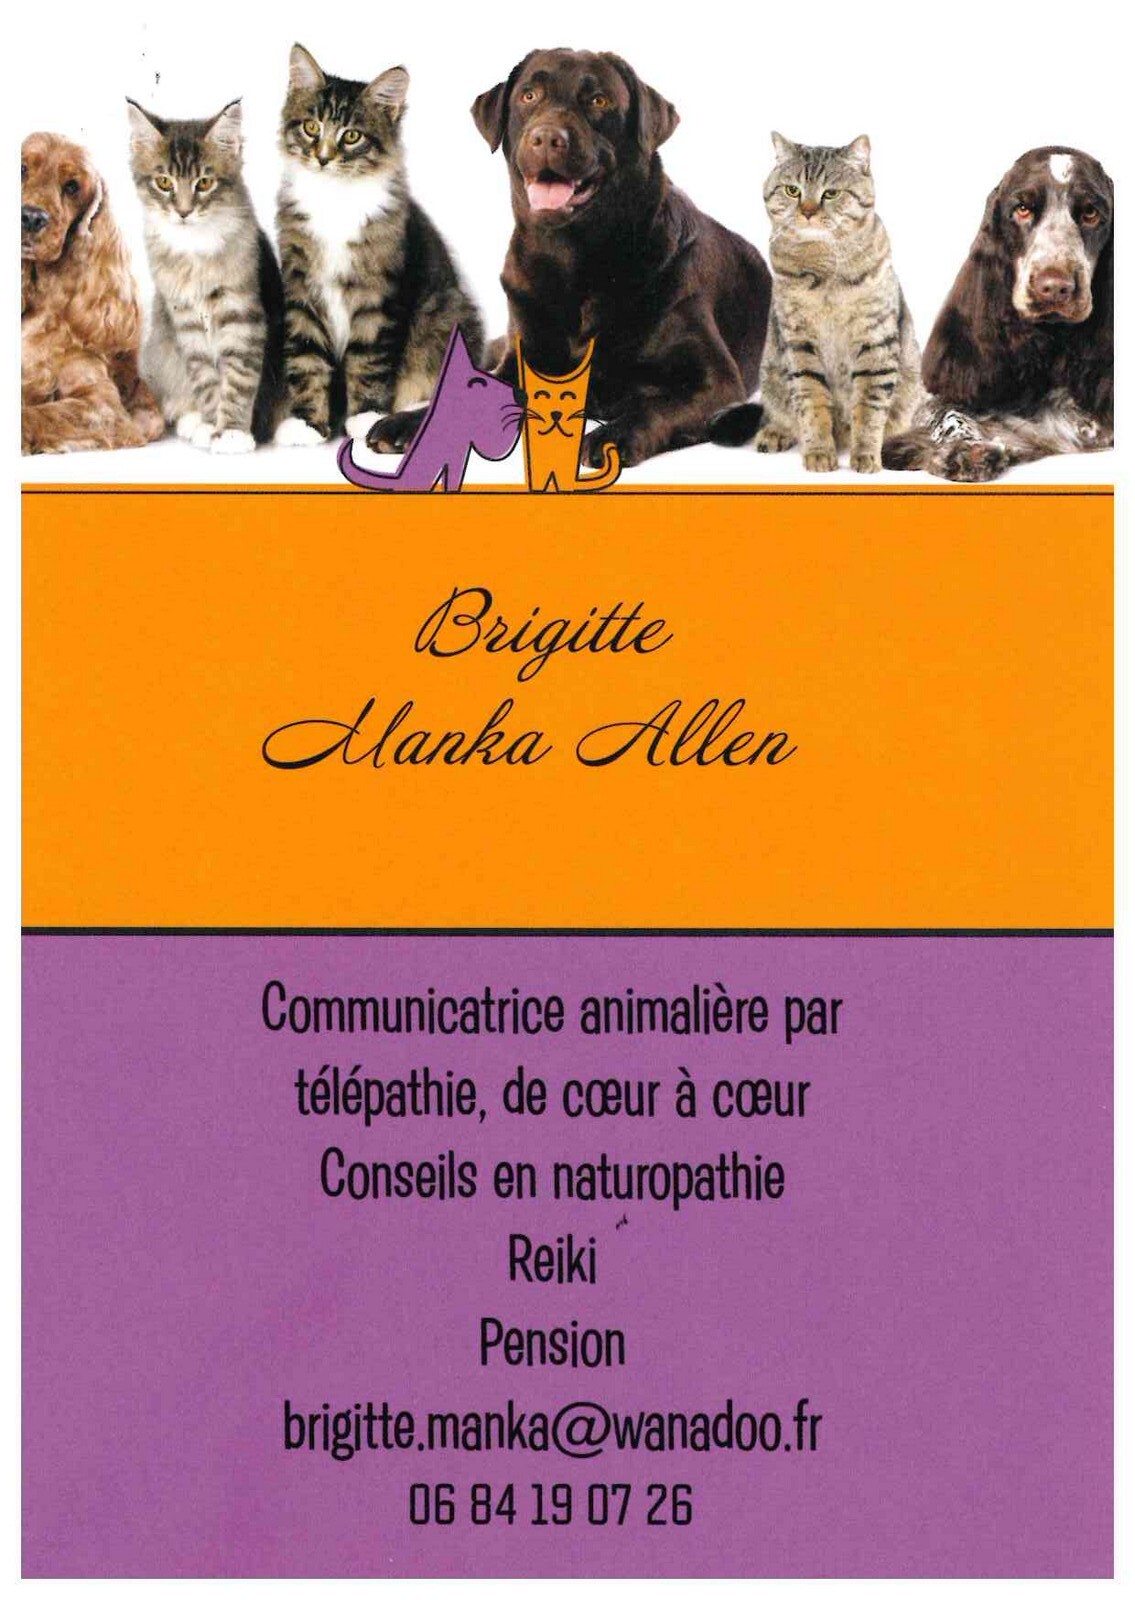 Photo Brigitte Manka Allen : Communicatrice animalière